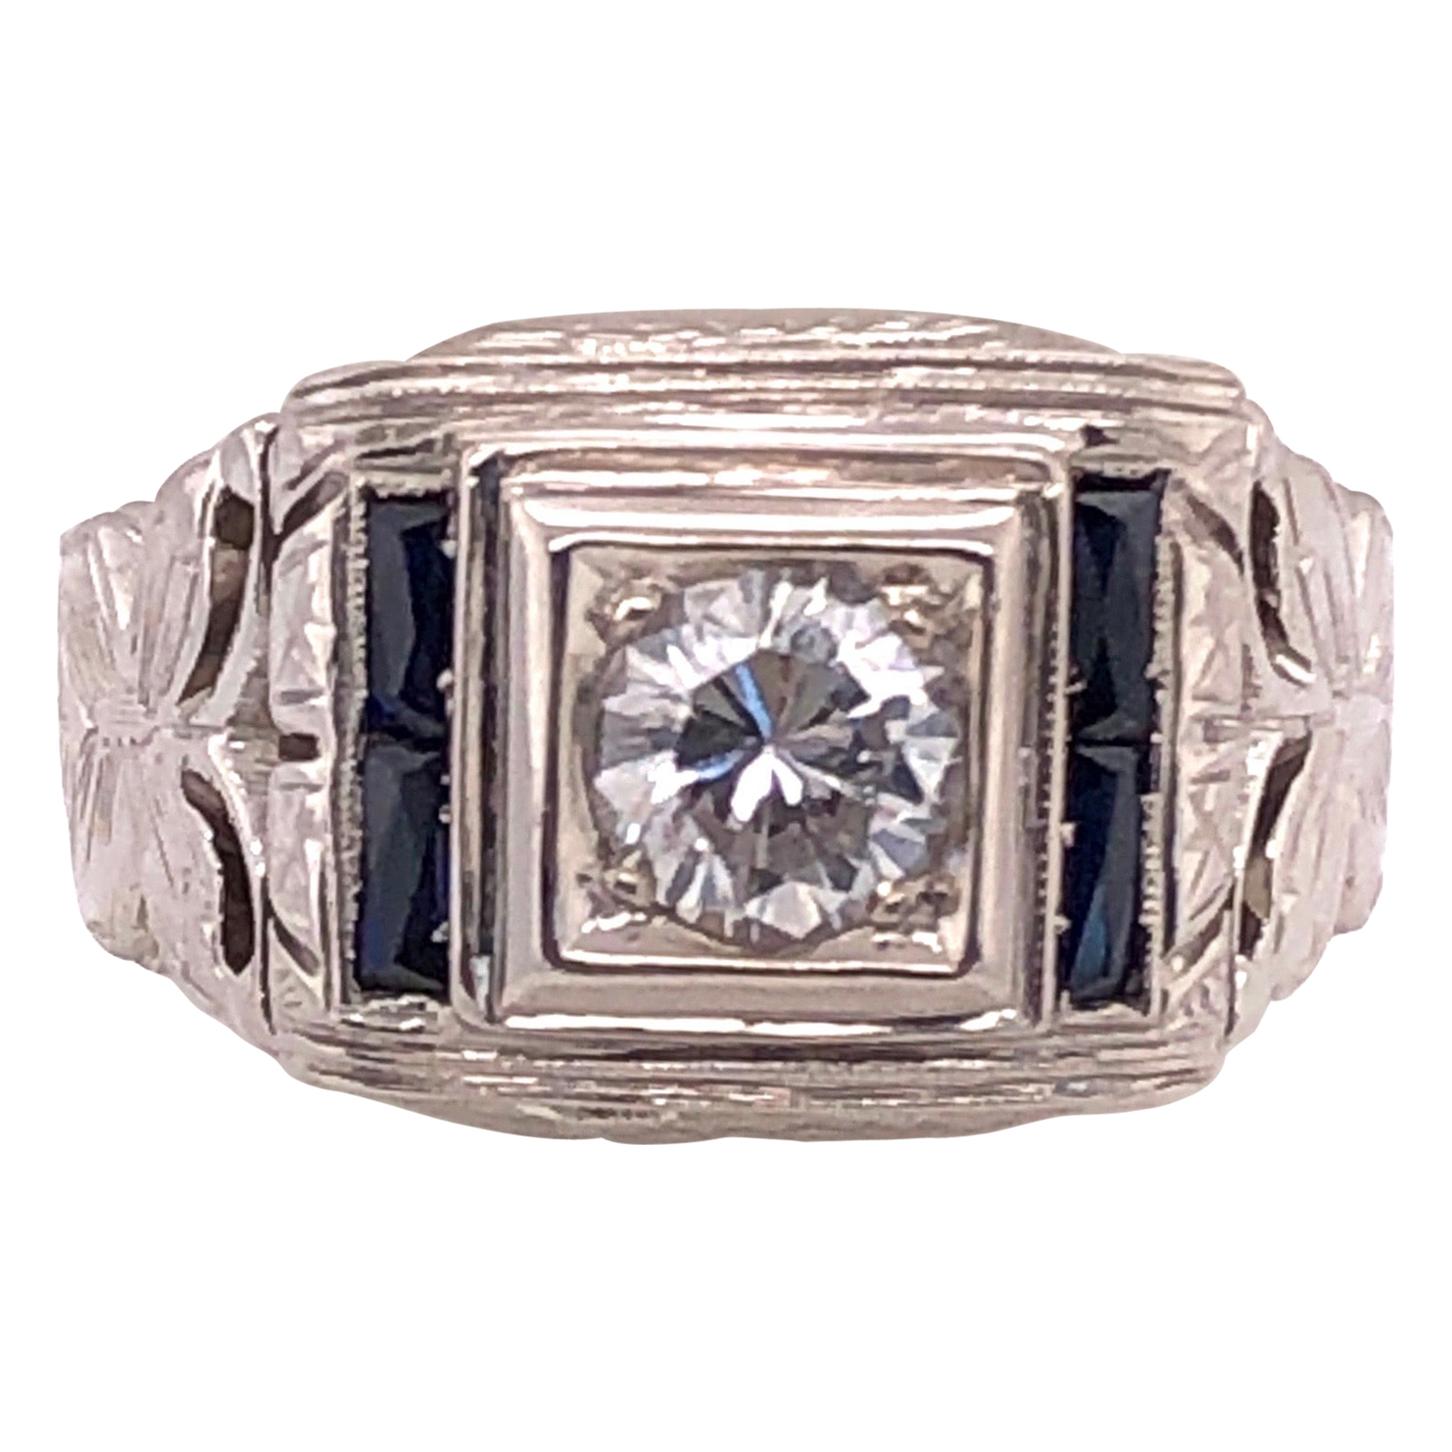 14 Karat White Gold Fashion Ring with Round Diamond and Sapphires